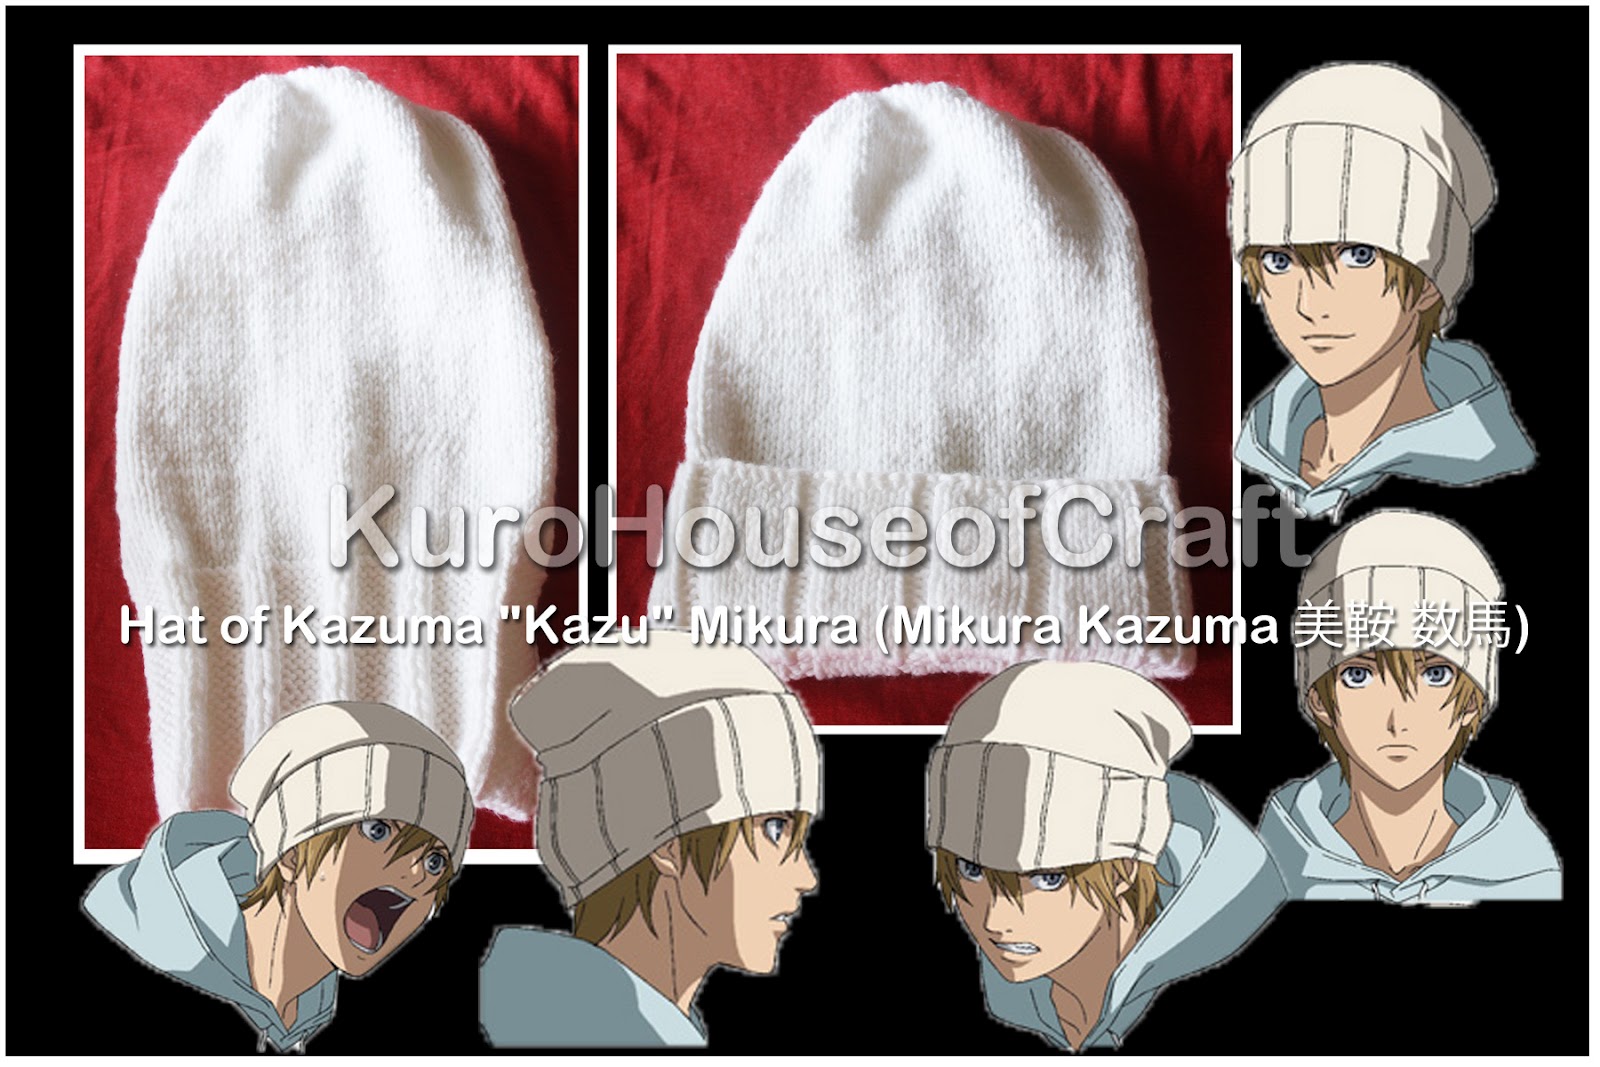 KuroHouse of Craft: Knitting Hat of Kazuma Kazu Mikura - Air Gear